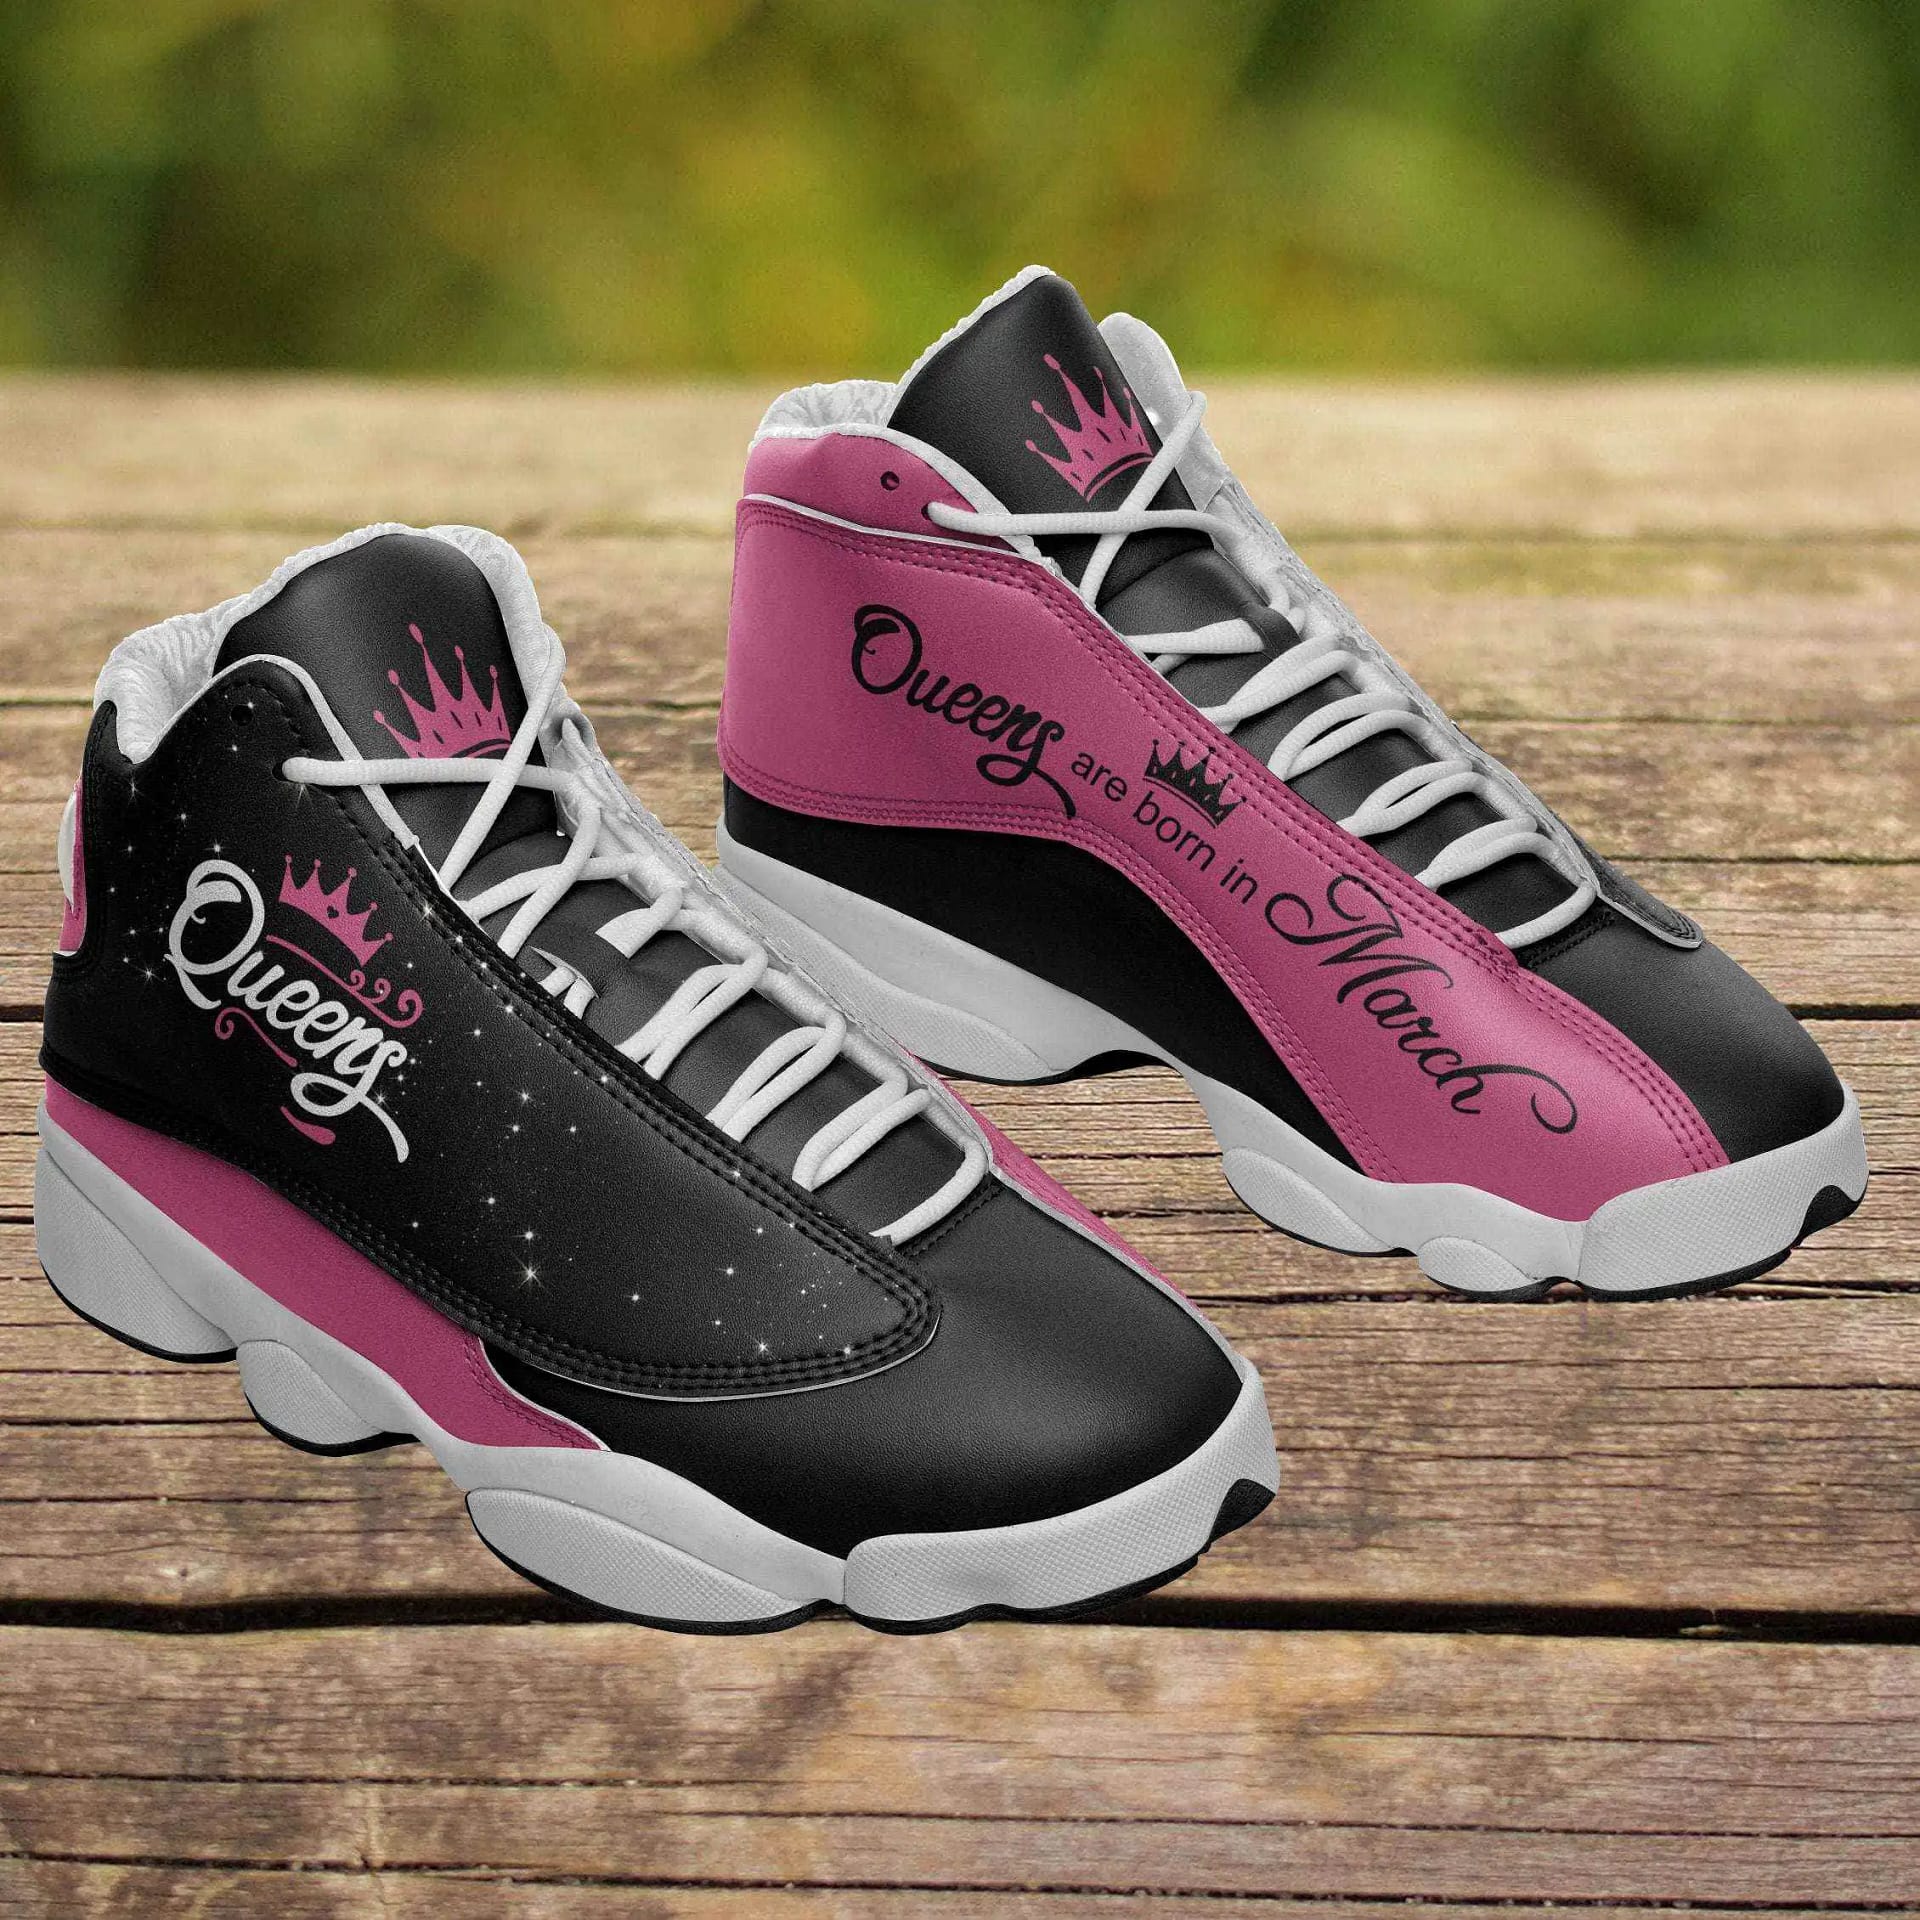 Queen Air Jordan Shoes